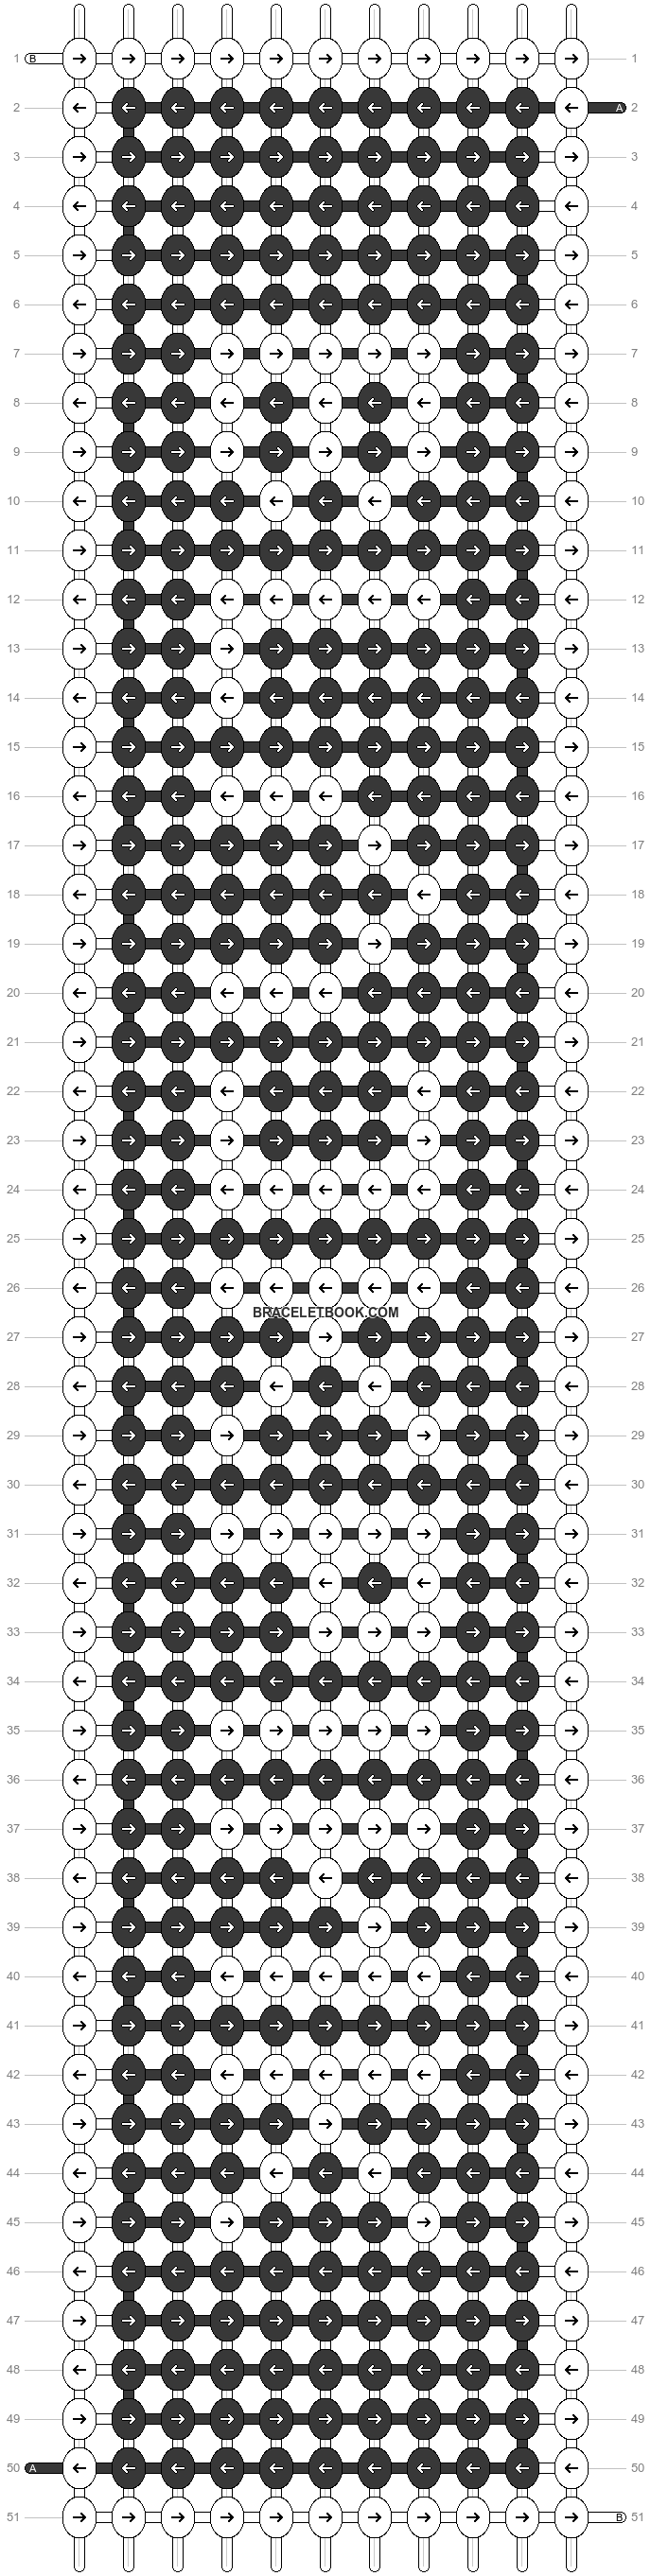 Alpha pattern #96893 variation #217126 pattern